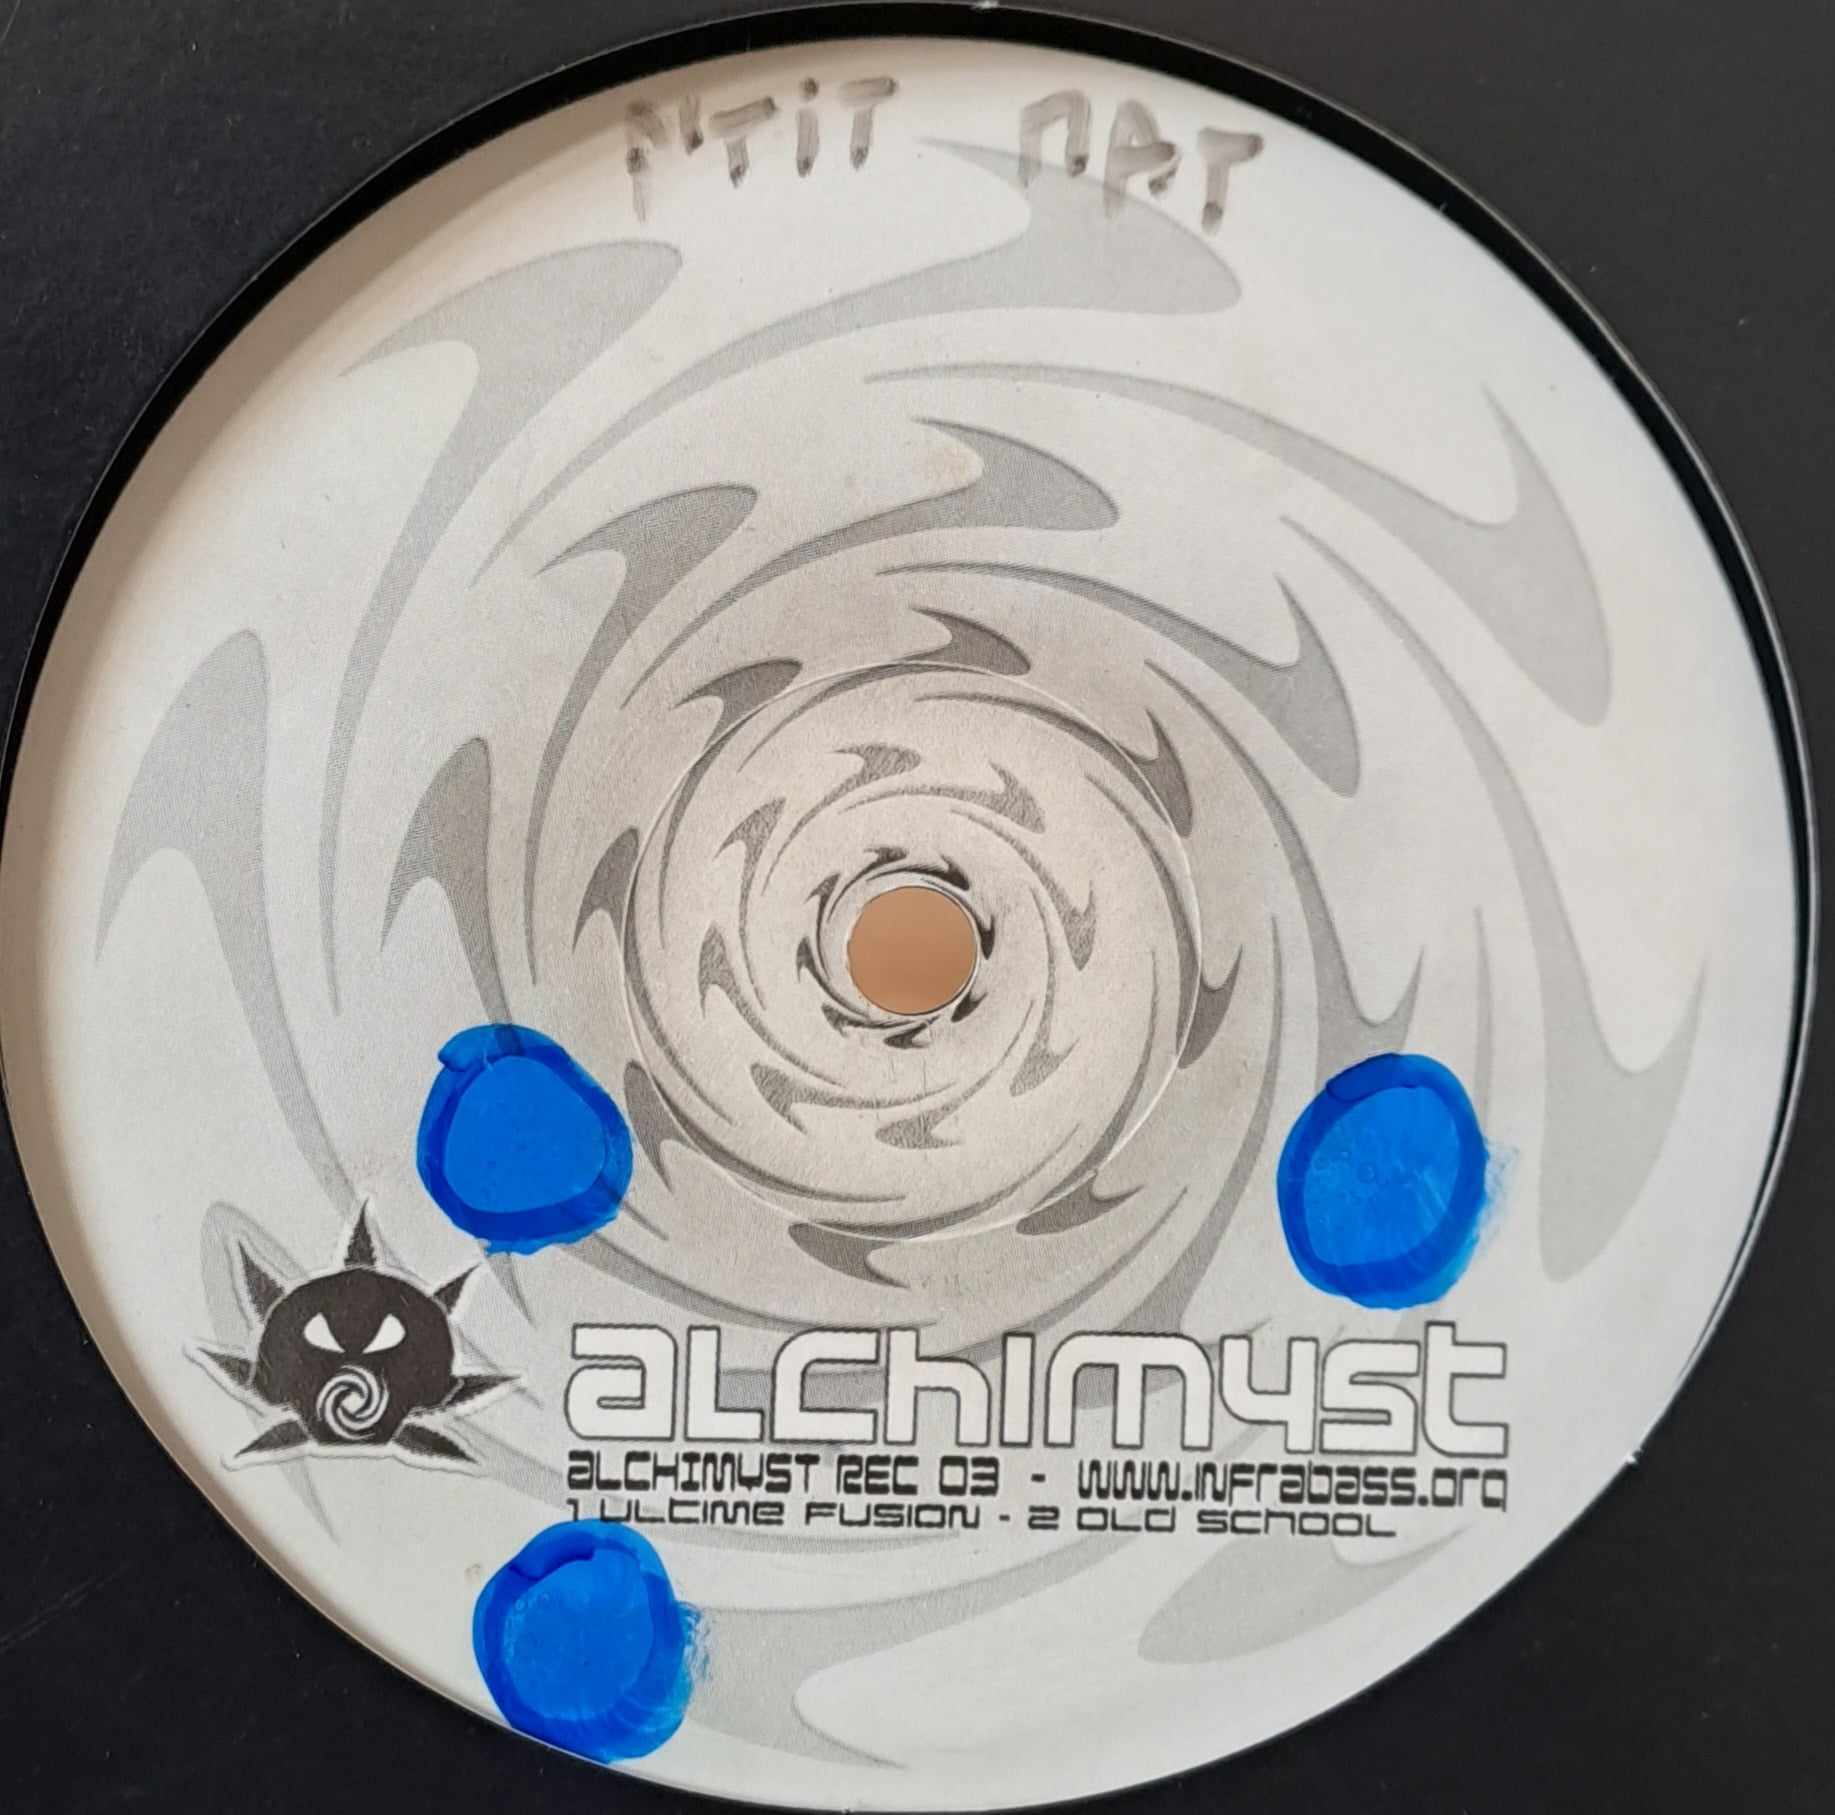 Alchimyst 03 - vinyle hardcore